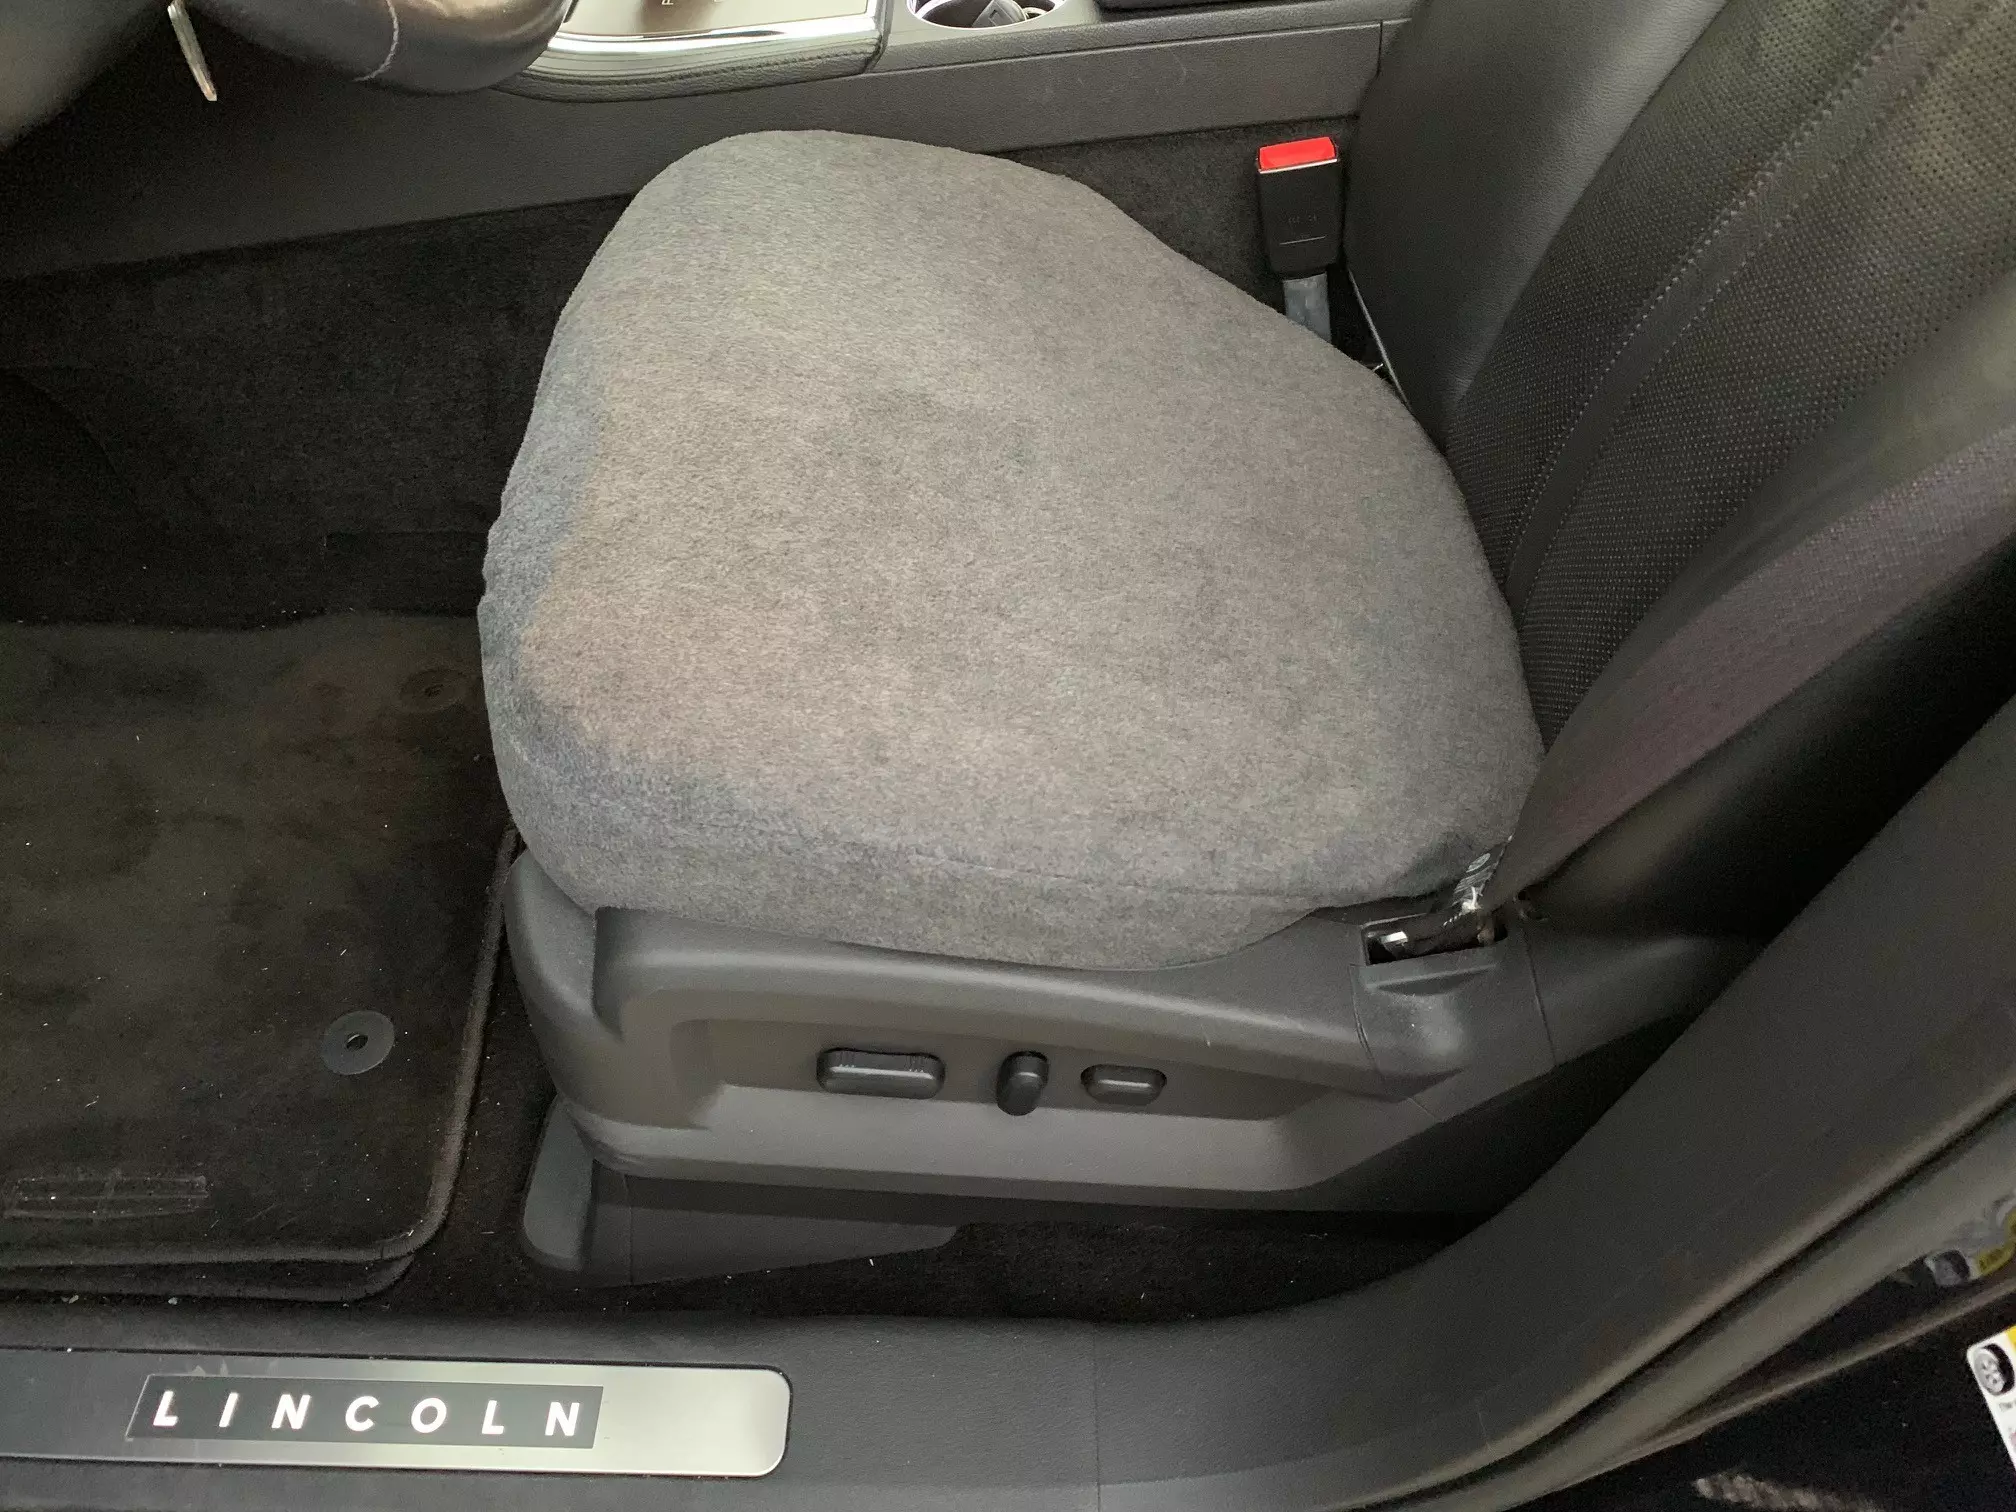 Fleece Bottom Seat Cover for Lexus LS430 2001-06 (PAIR)